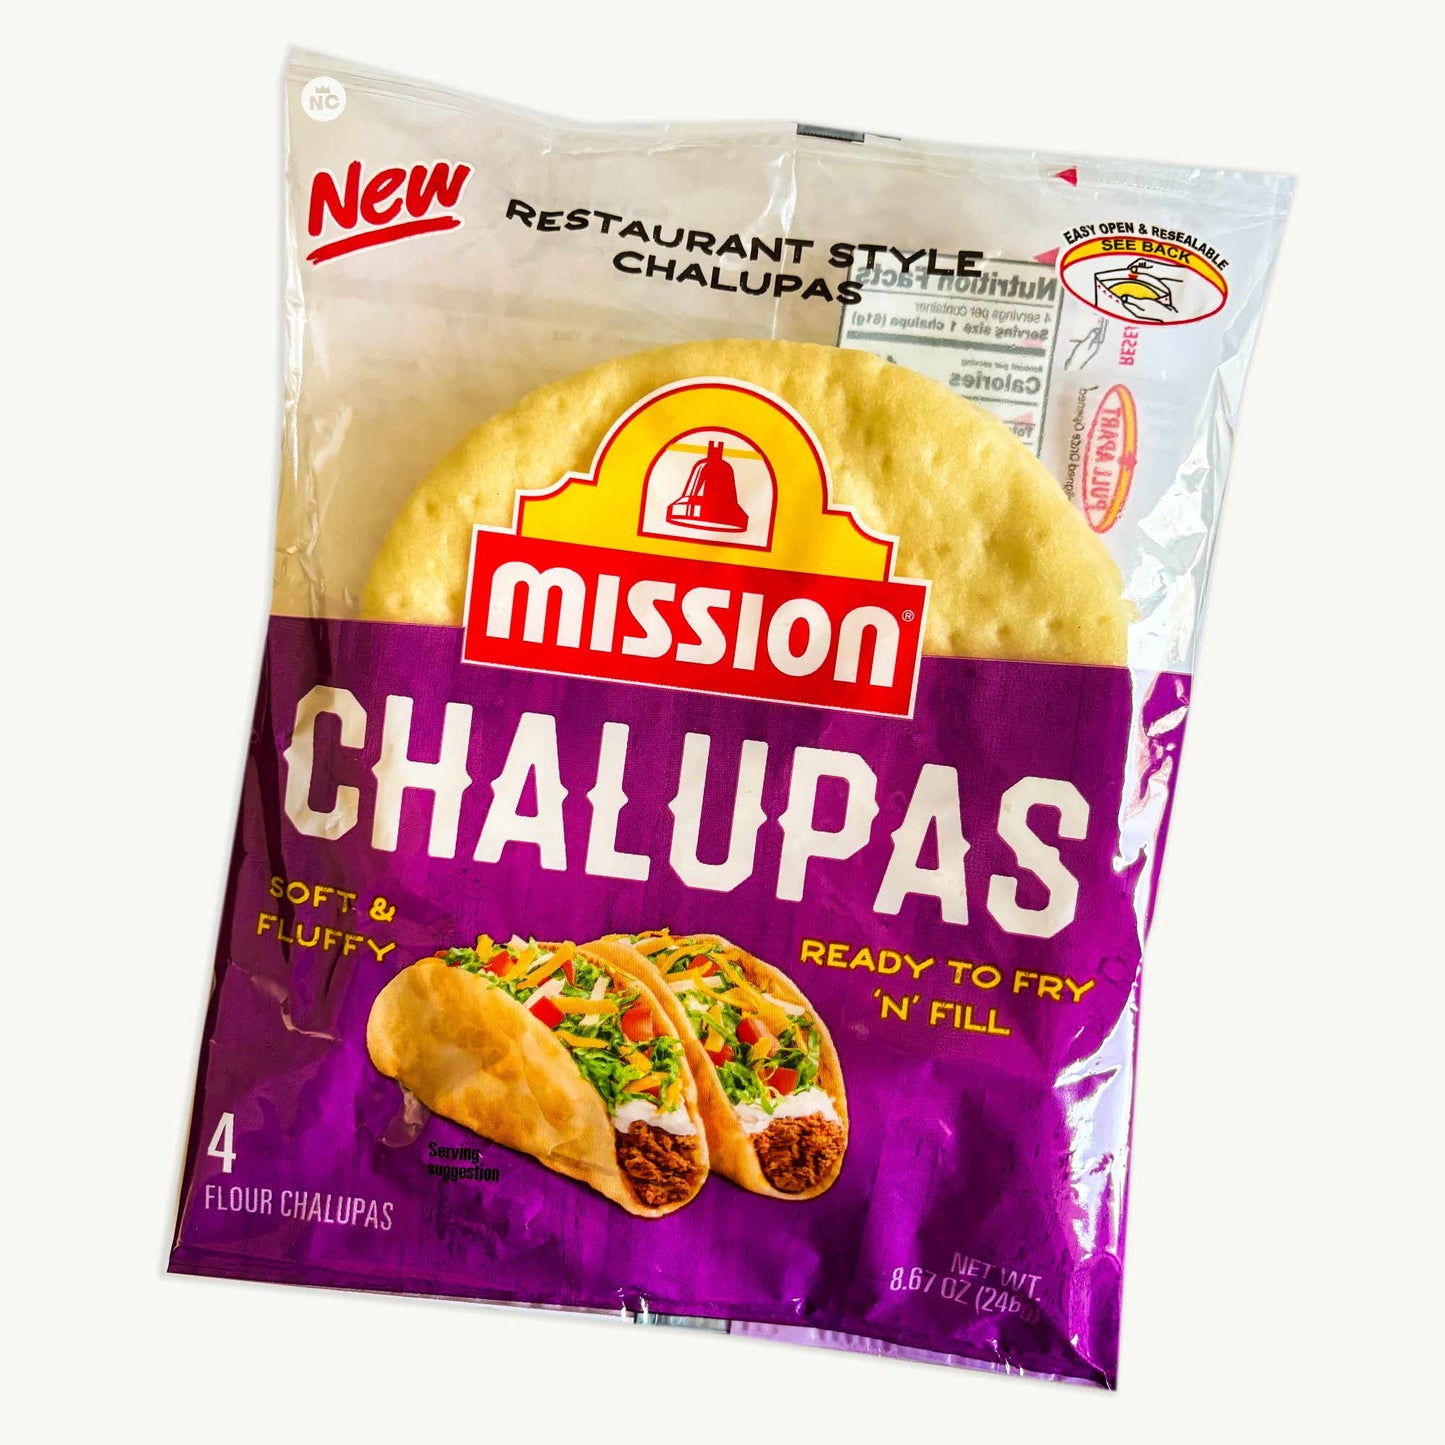 Mission Chalupas (2pks - 8ct) - Late July Jalapeno Lime Tortillas (7.8oz)